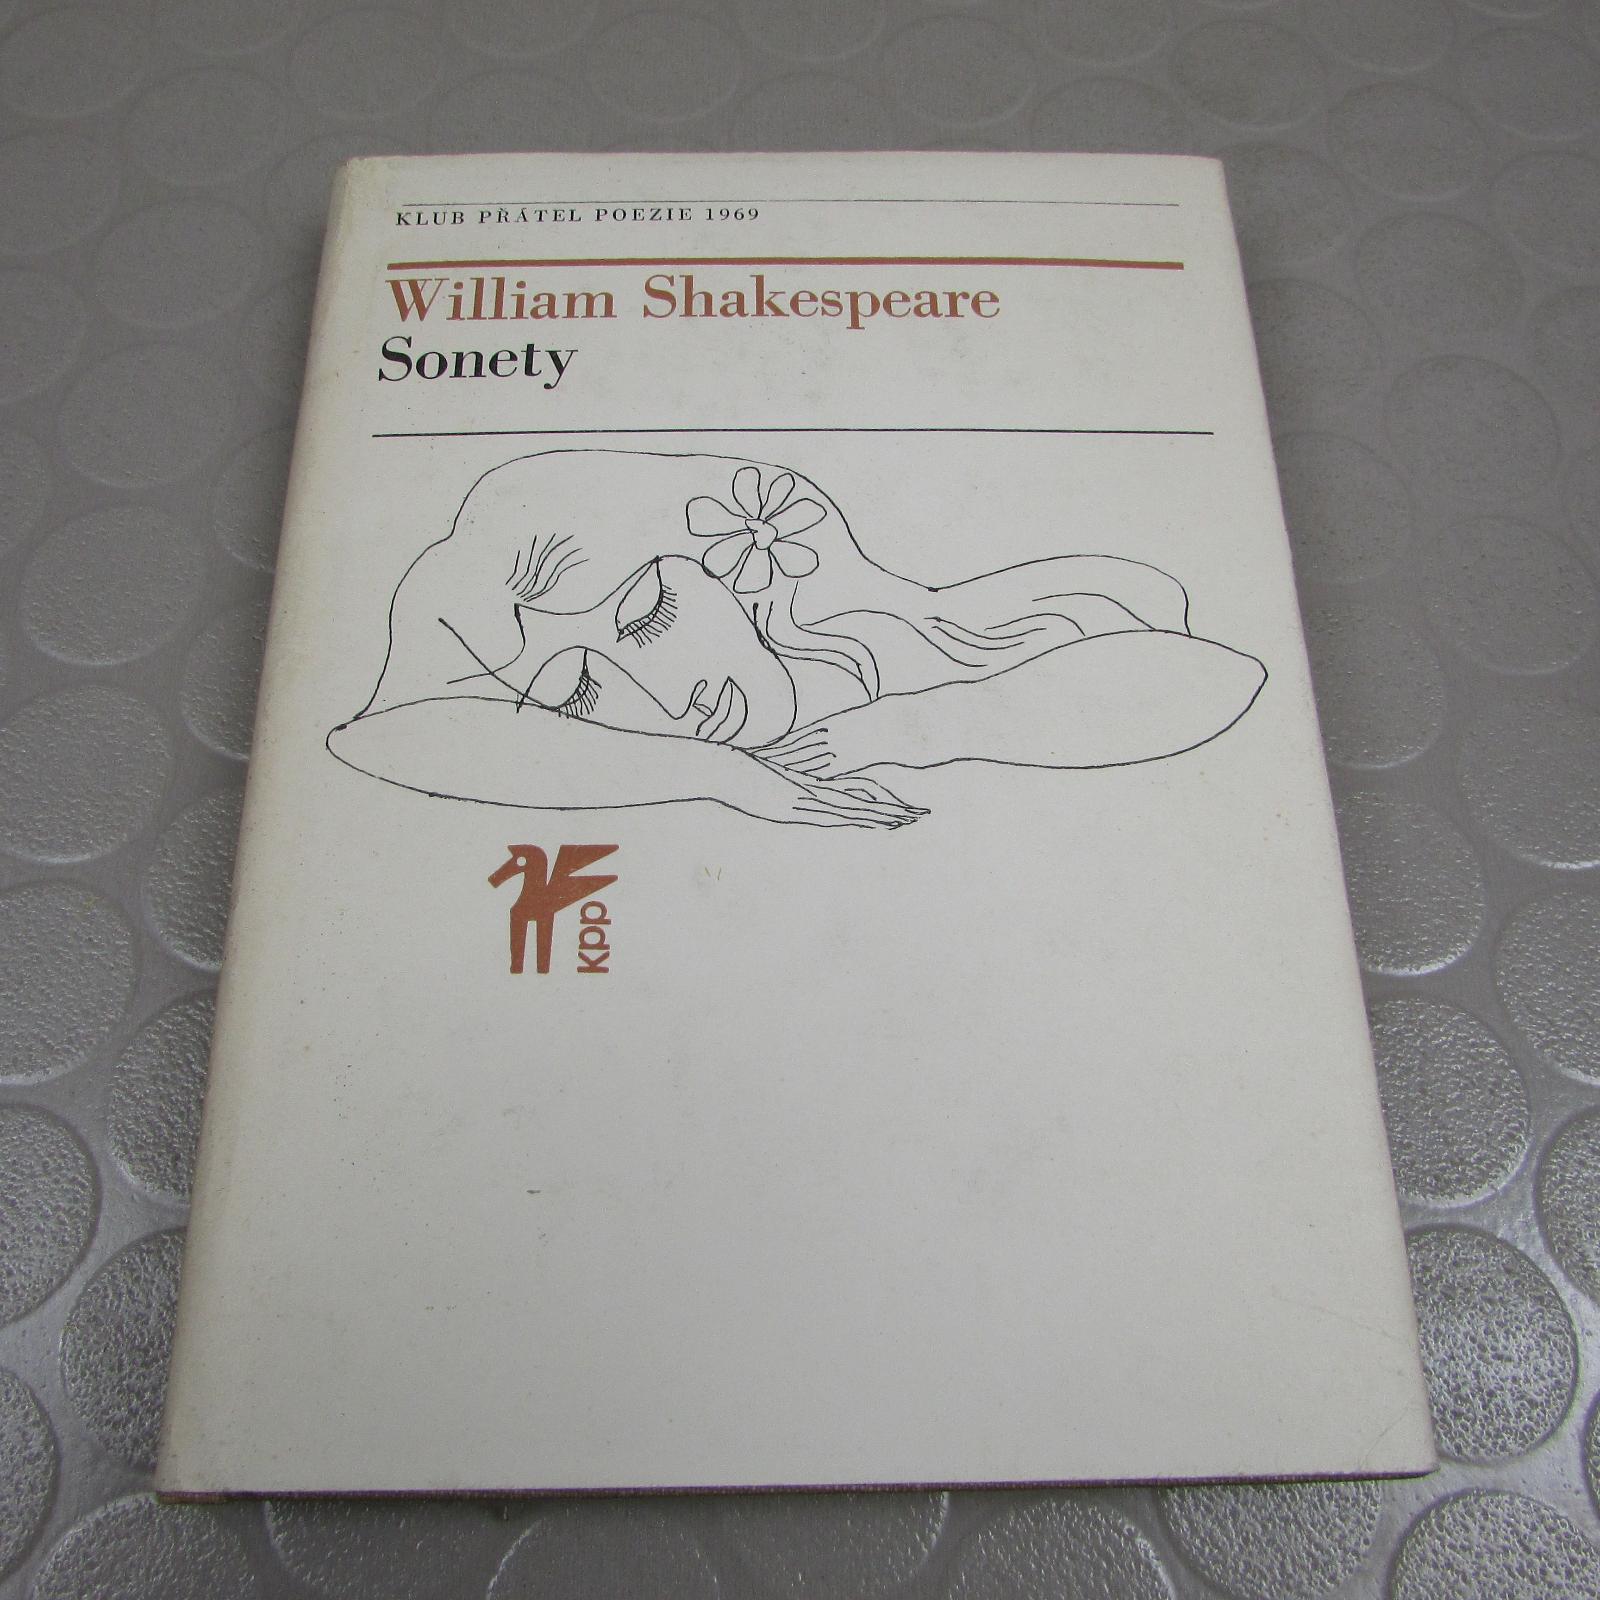 Sonety (195) William Shakespeare - Knihy a časopisy